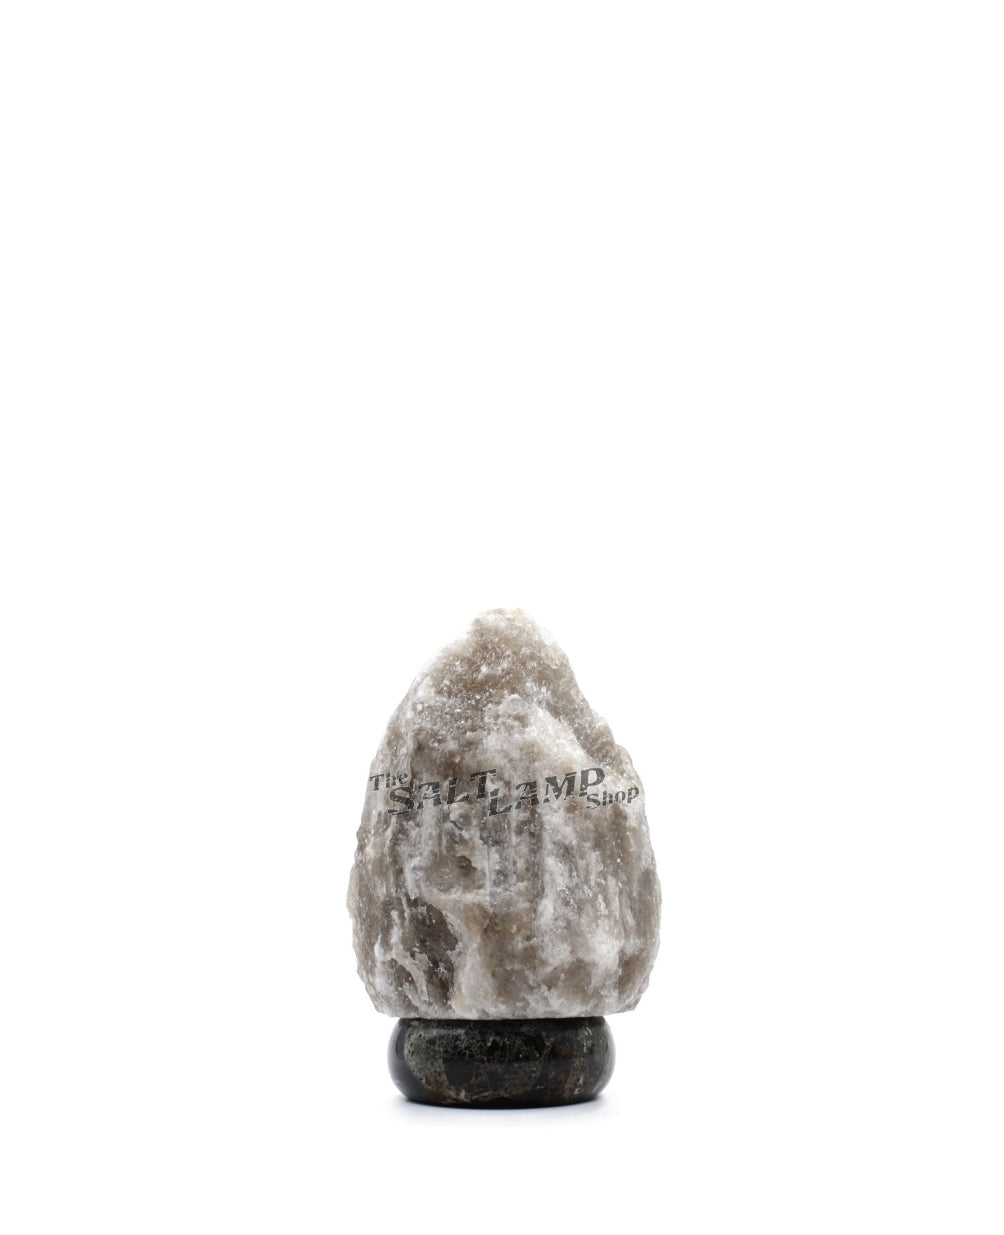 1-2kg Rare Grey Himalayan Salt Lamp (Black Zebra Marble Base)